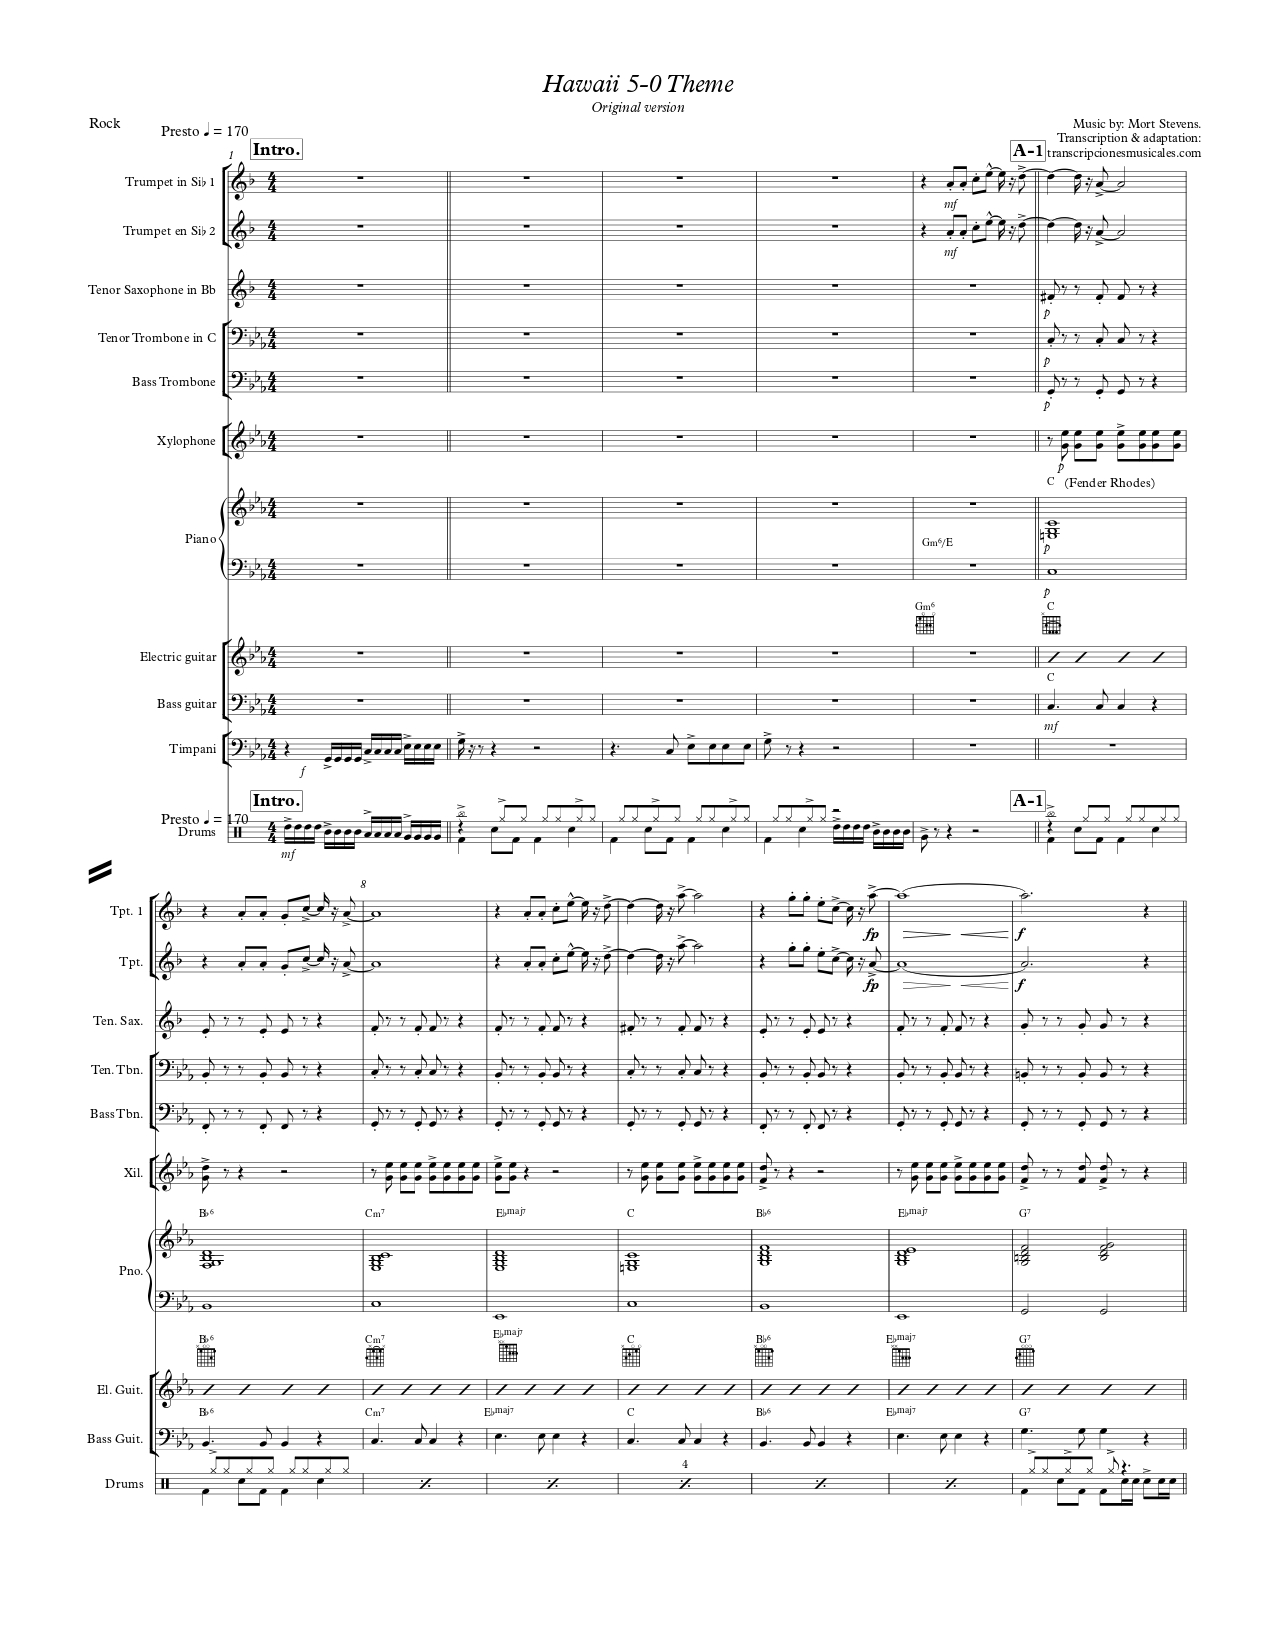 Hawaii five-0 theme - sheet music page 1